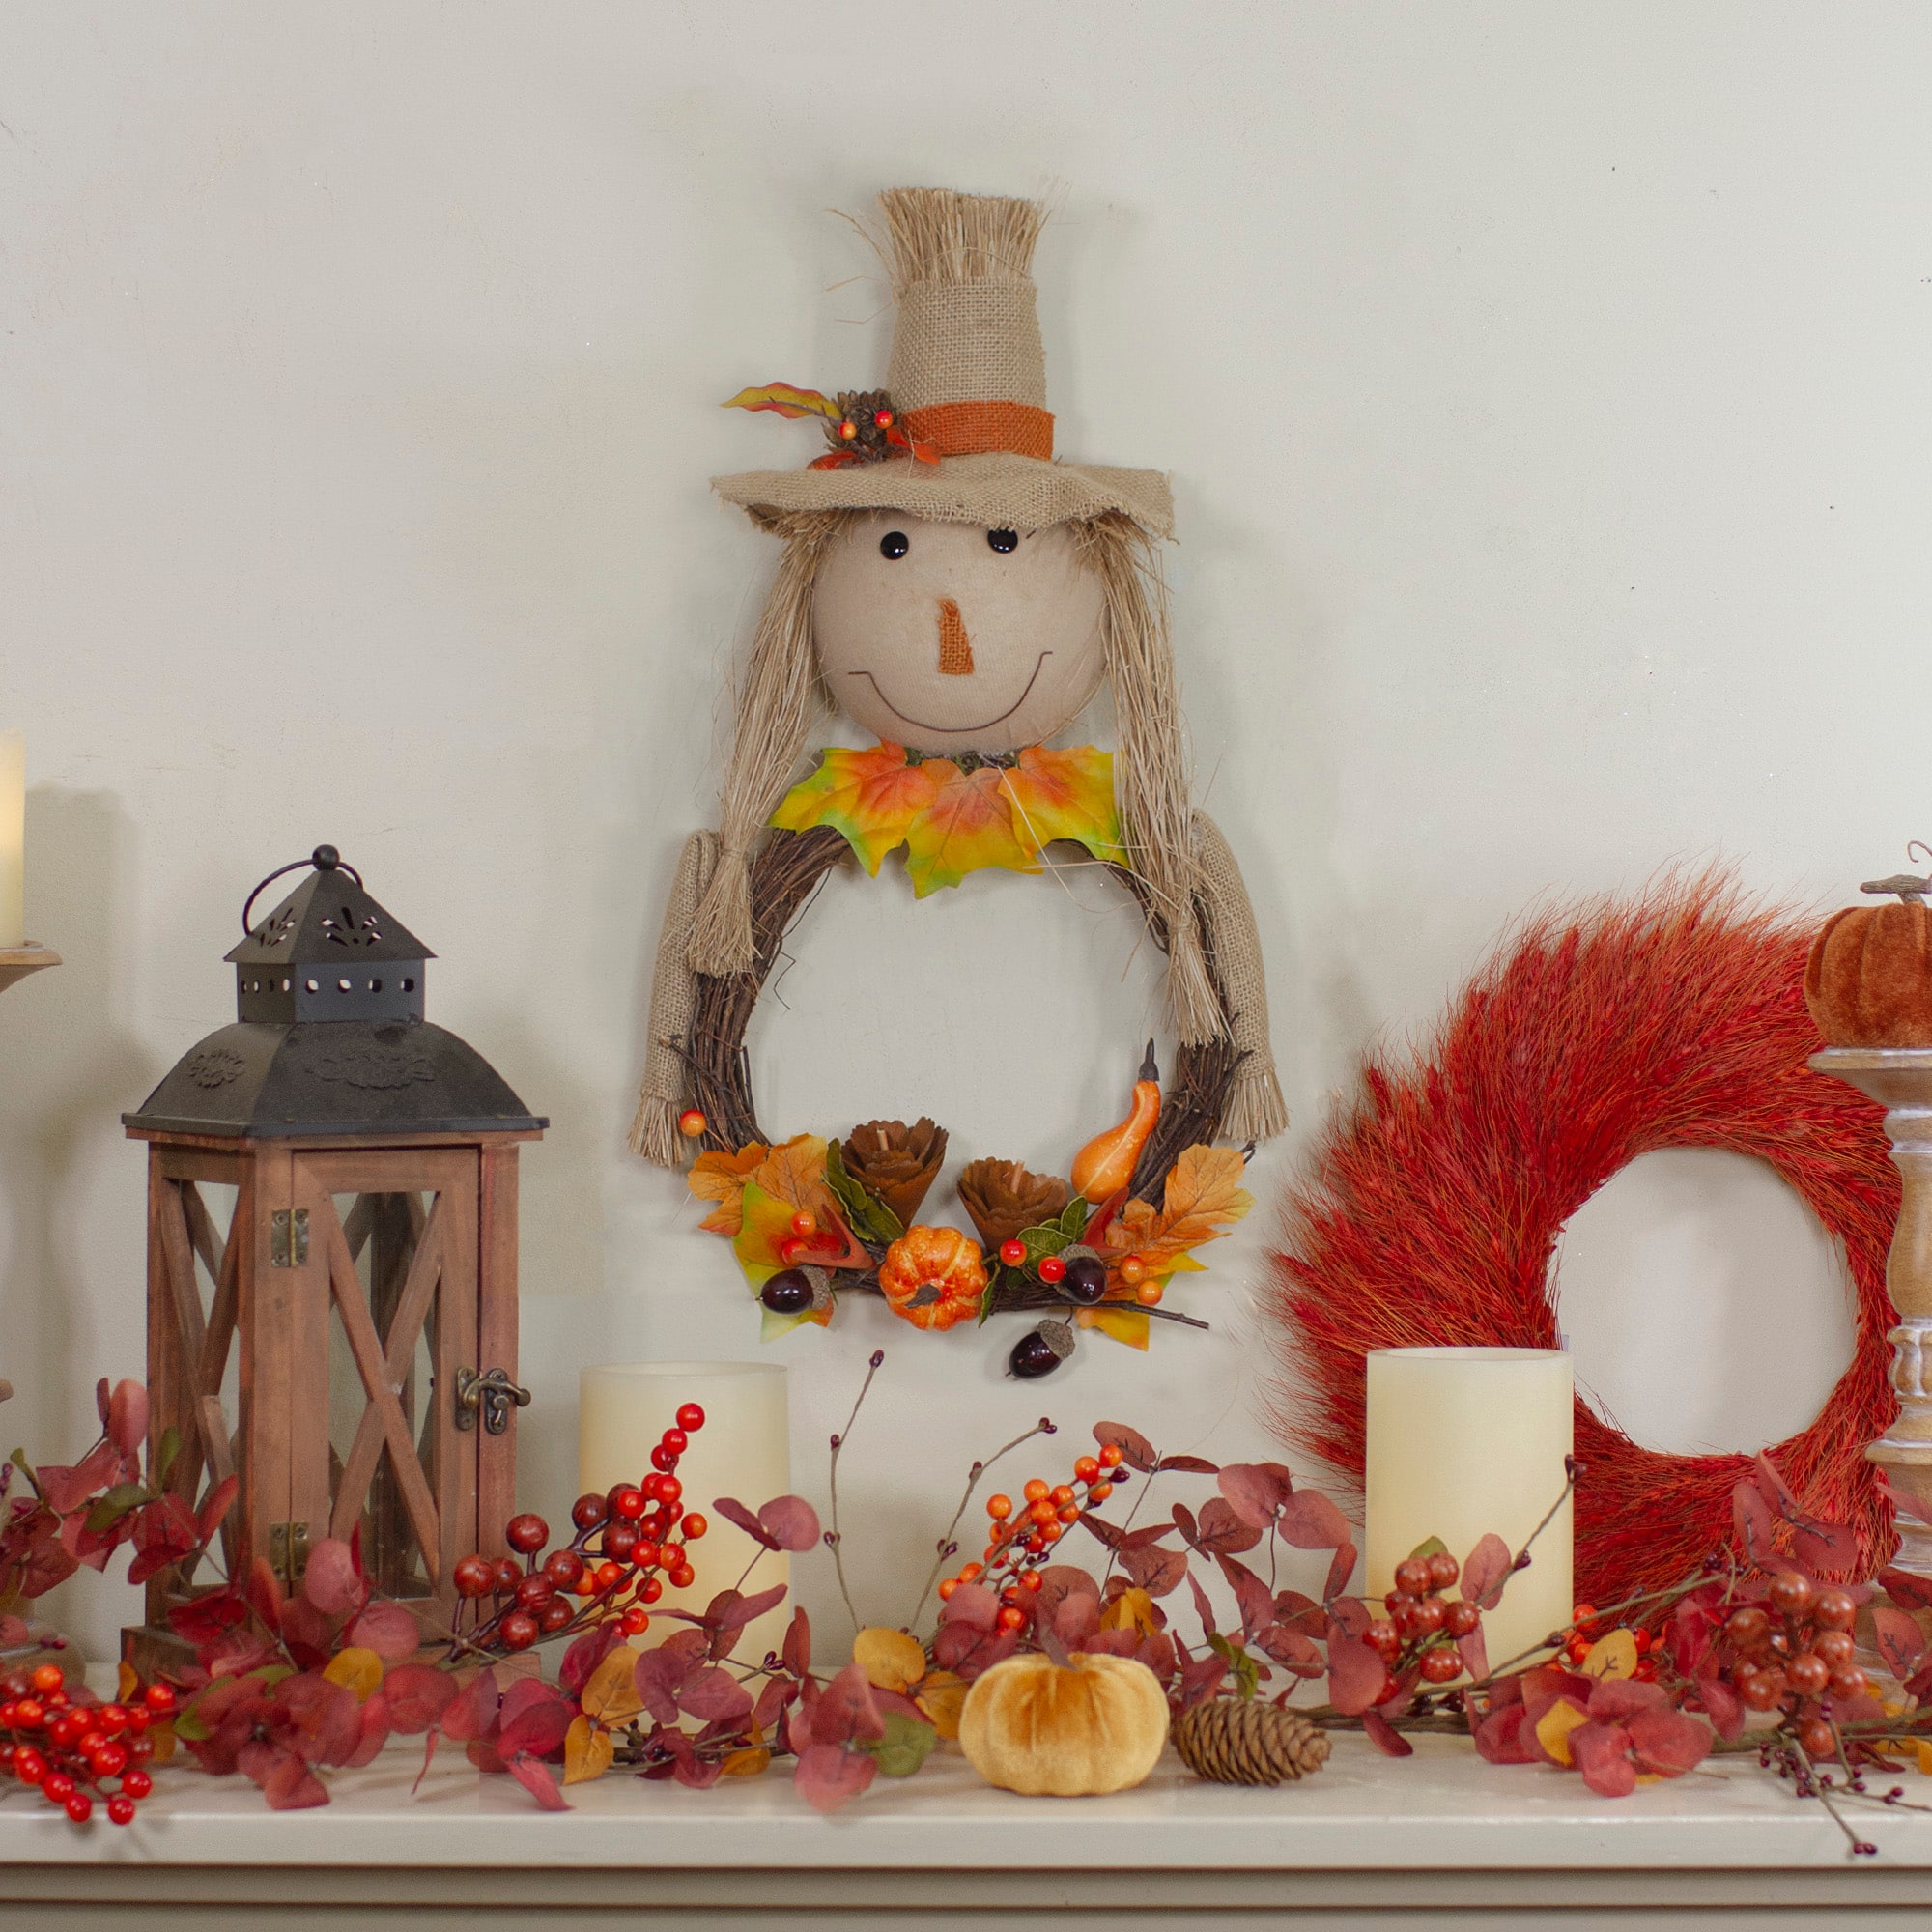 20&#x22; Yellow &#x26; Tan Fall Harvest Scarecrow Wreath Wall Decor